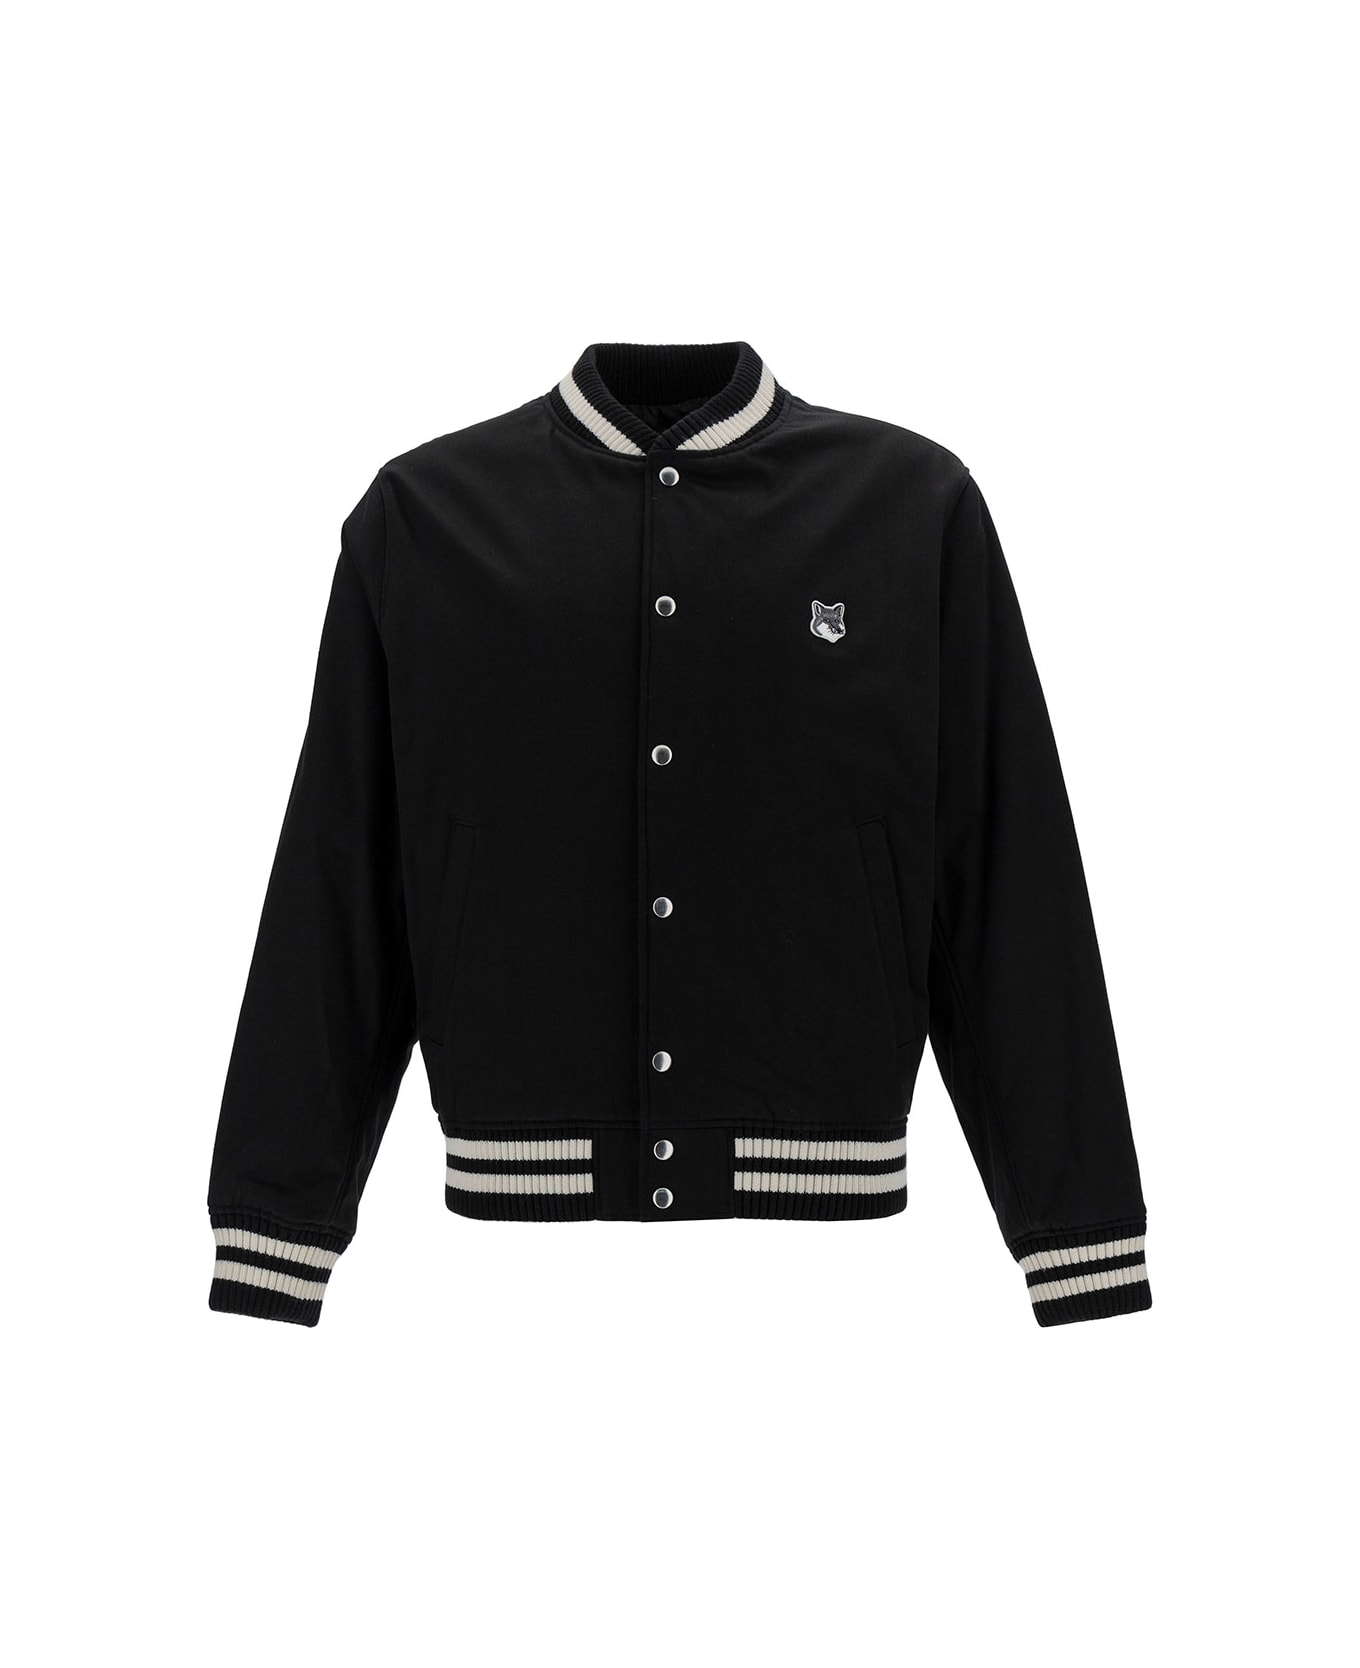 Maison Kitsuné Black Varsity Jacket With Fox Head Patch In Cotton Man - Black